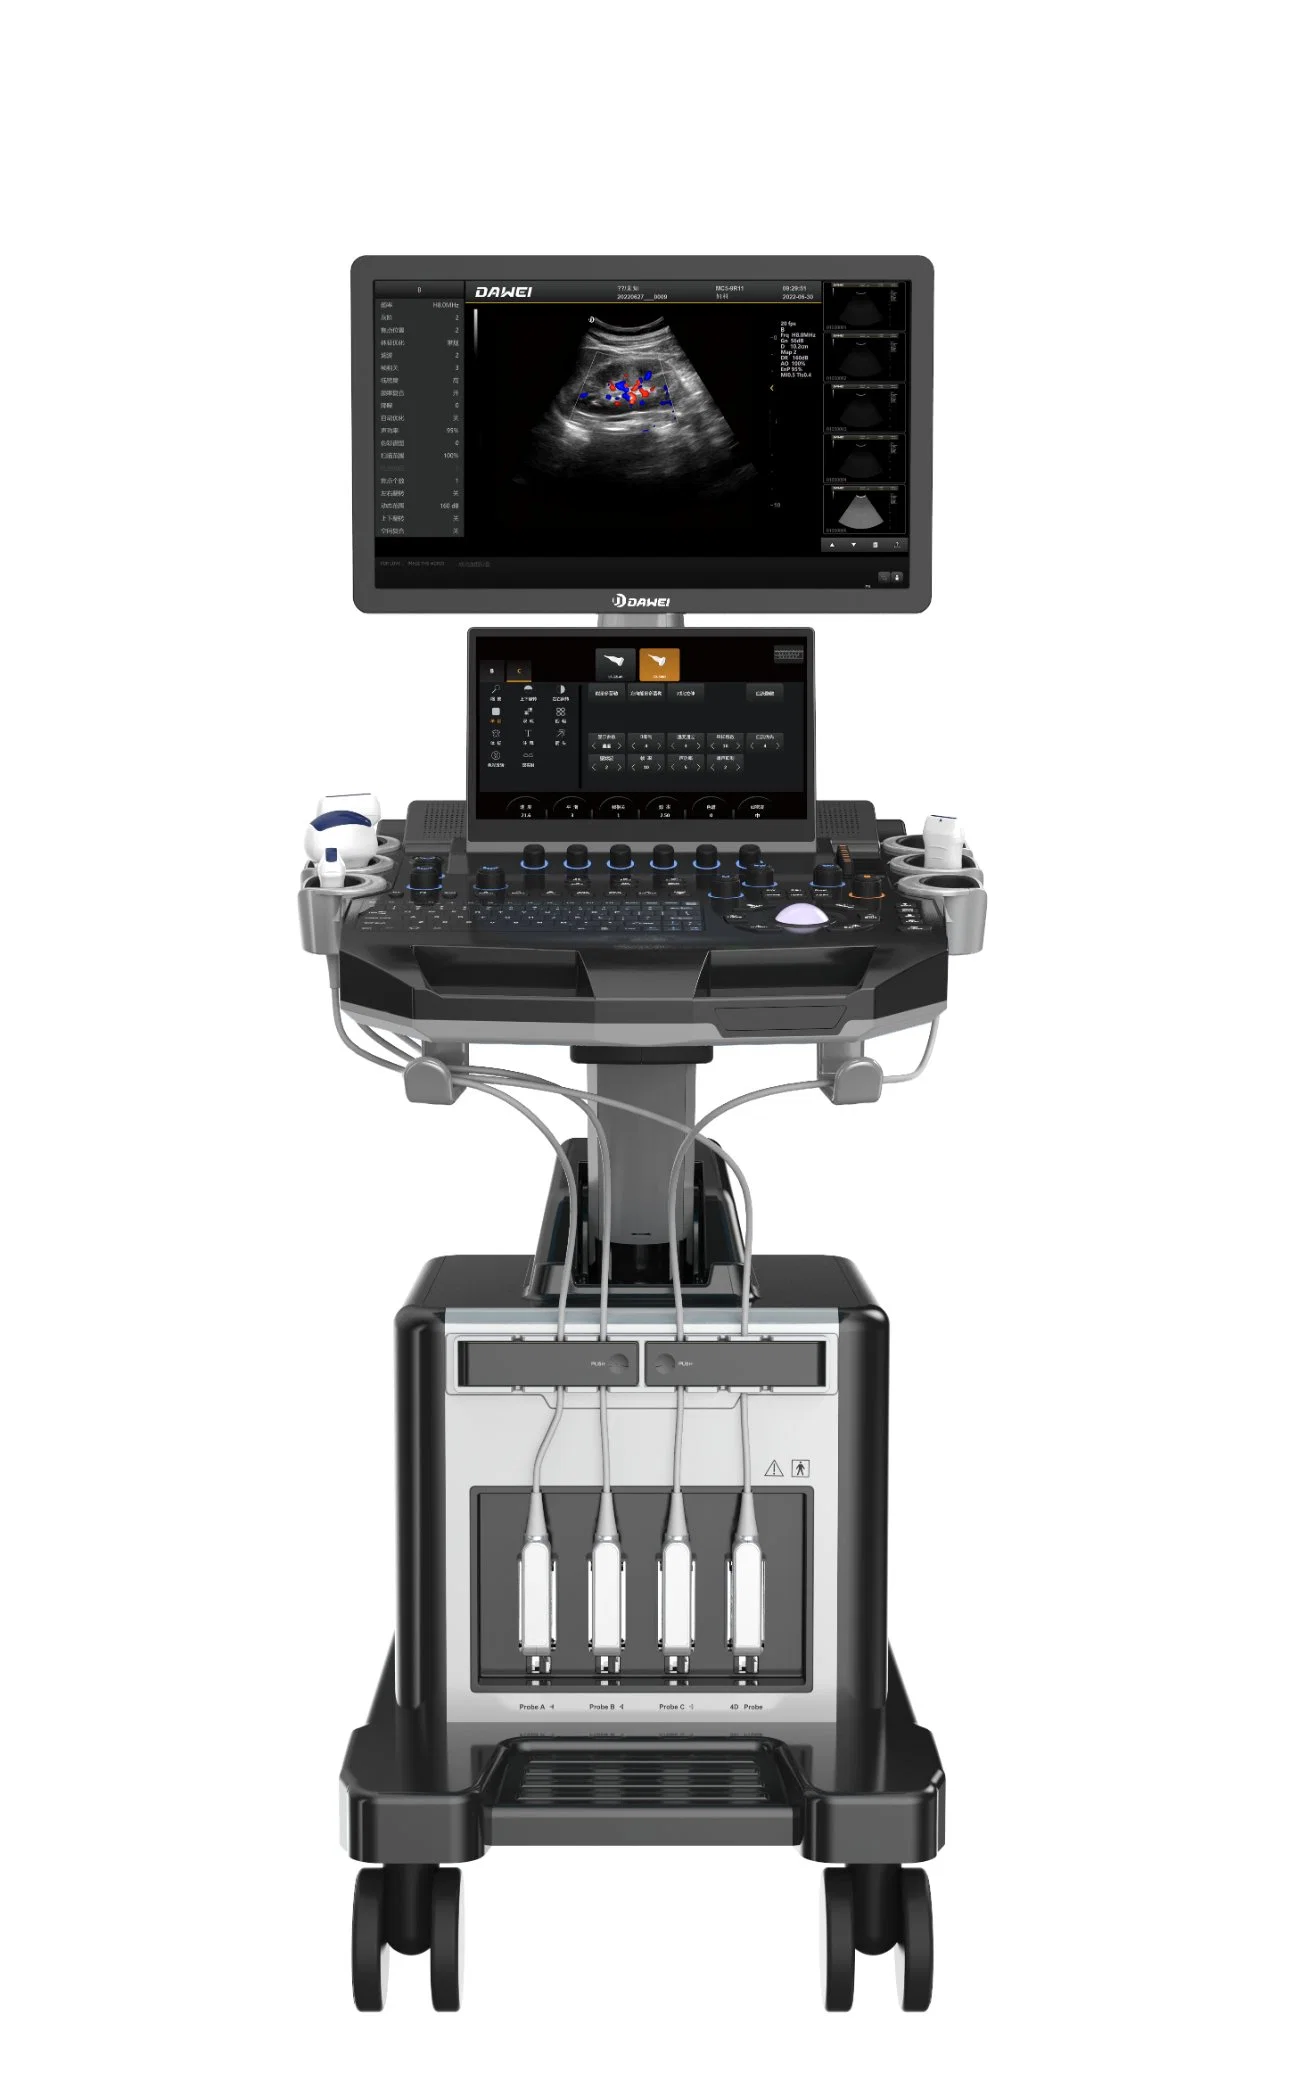 4D Clear Image Trolley Type Dwt30 Color Doppler Ultrasound Machine Для здоровья женщин с 4D зондом